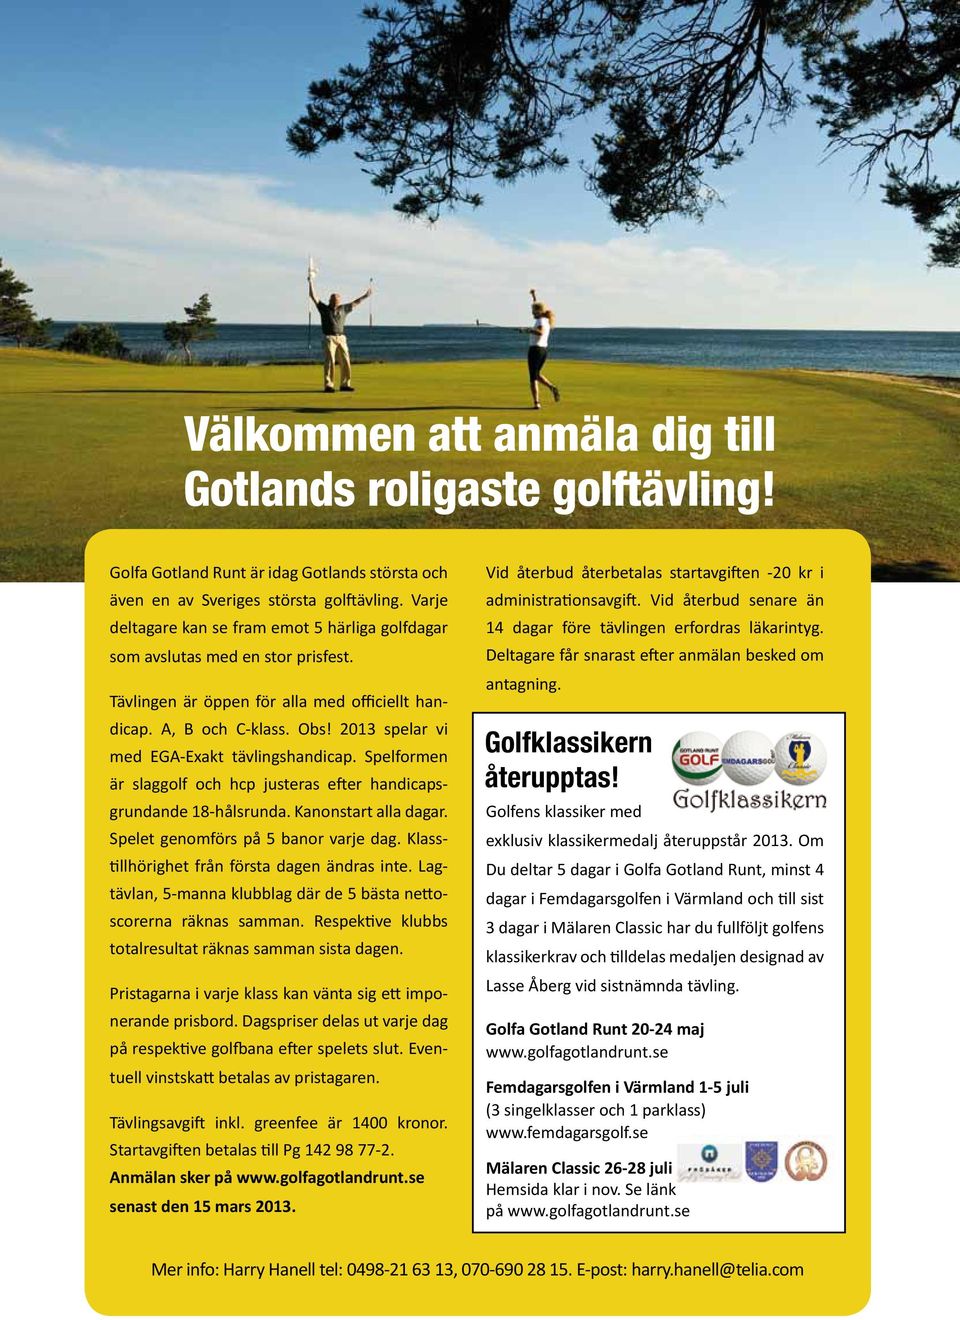 Spela Gotlands alla golfbanor i en tävling! - PDF Free Download